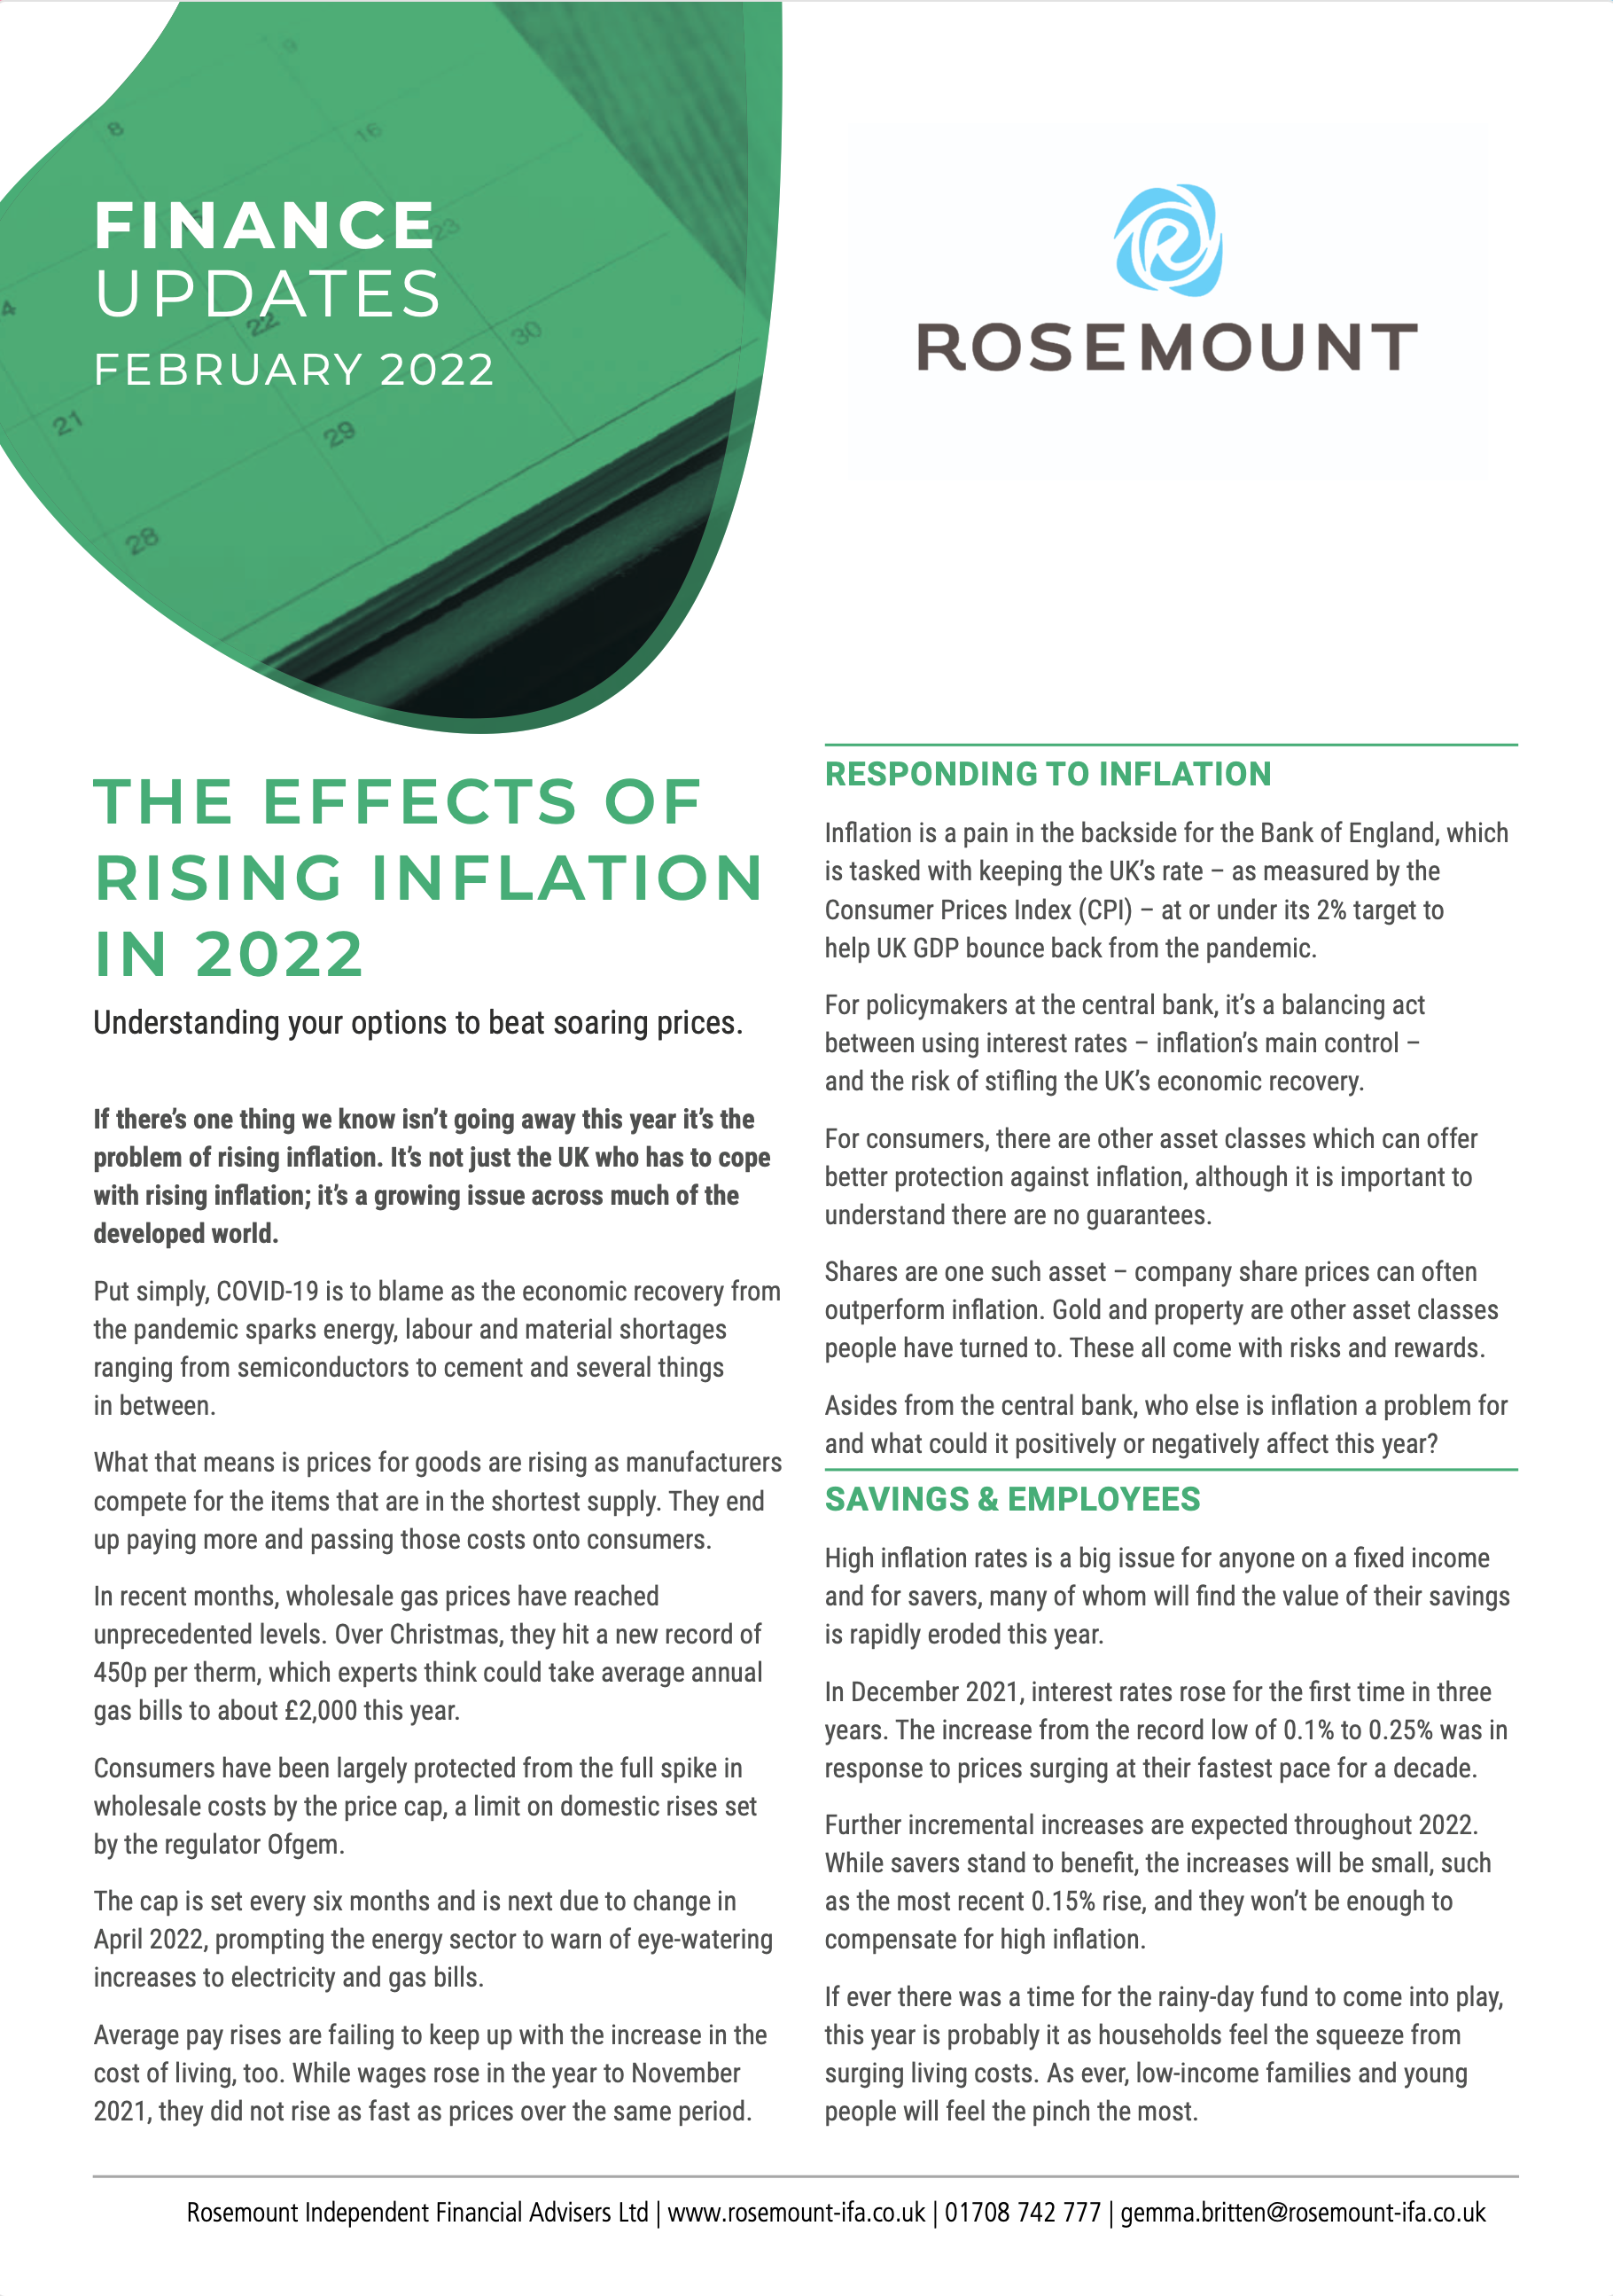 Rosemount finance update February front cover